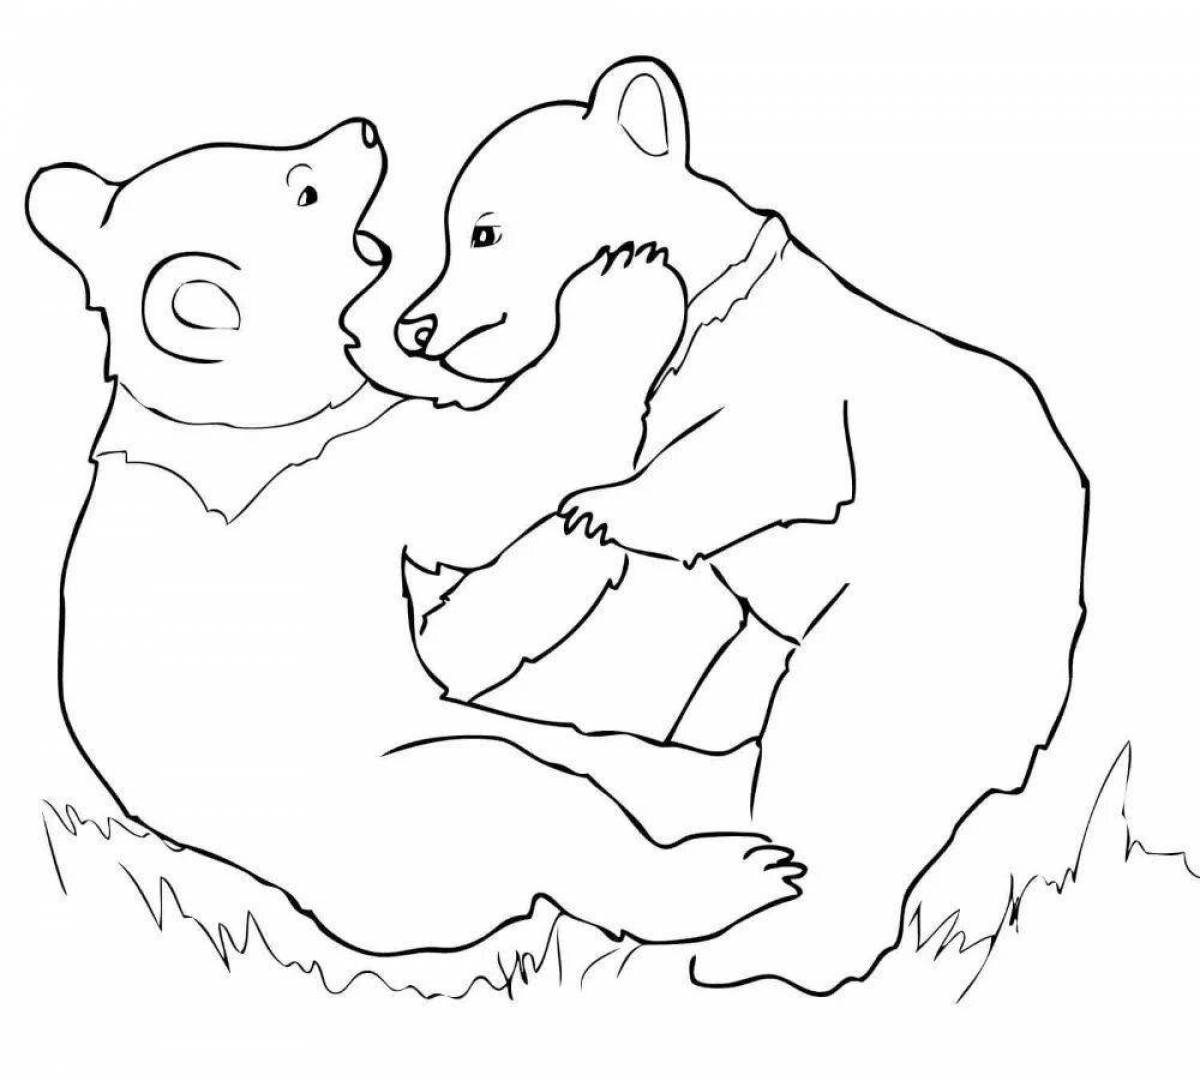 Два любознательных жадных медвежонка